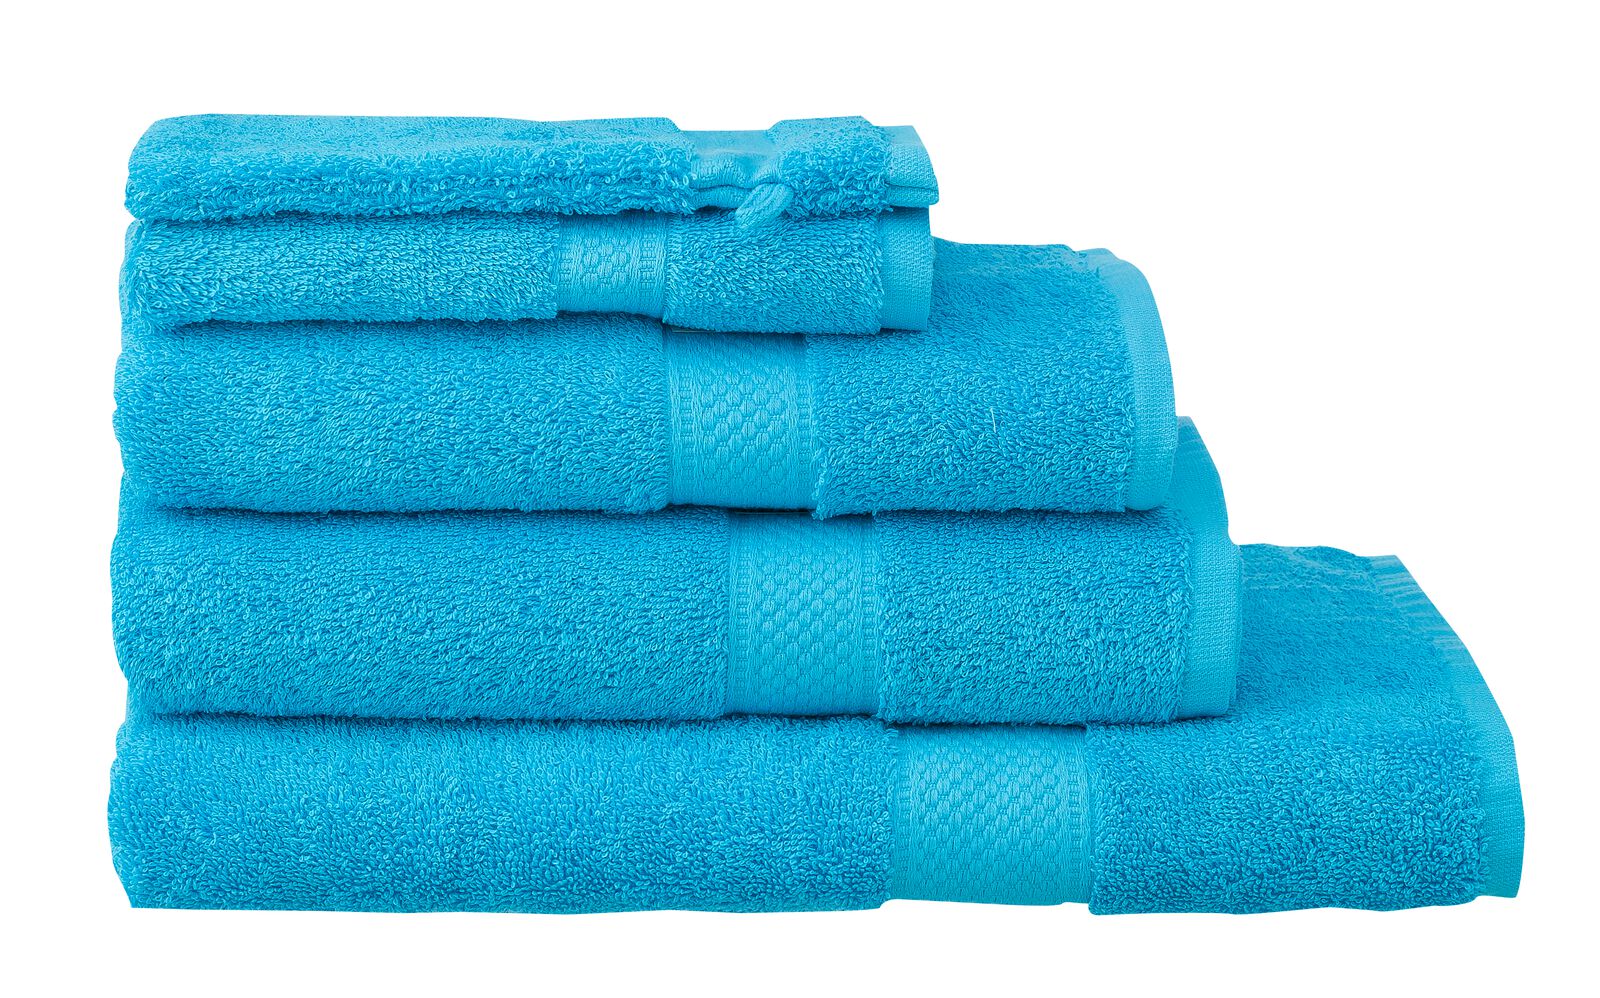 baddoek zware kwaliteit 60 x 110 - aqua aqua handdoek 60 x 110 - 5213605 - HEMA